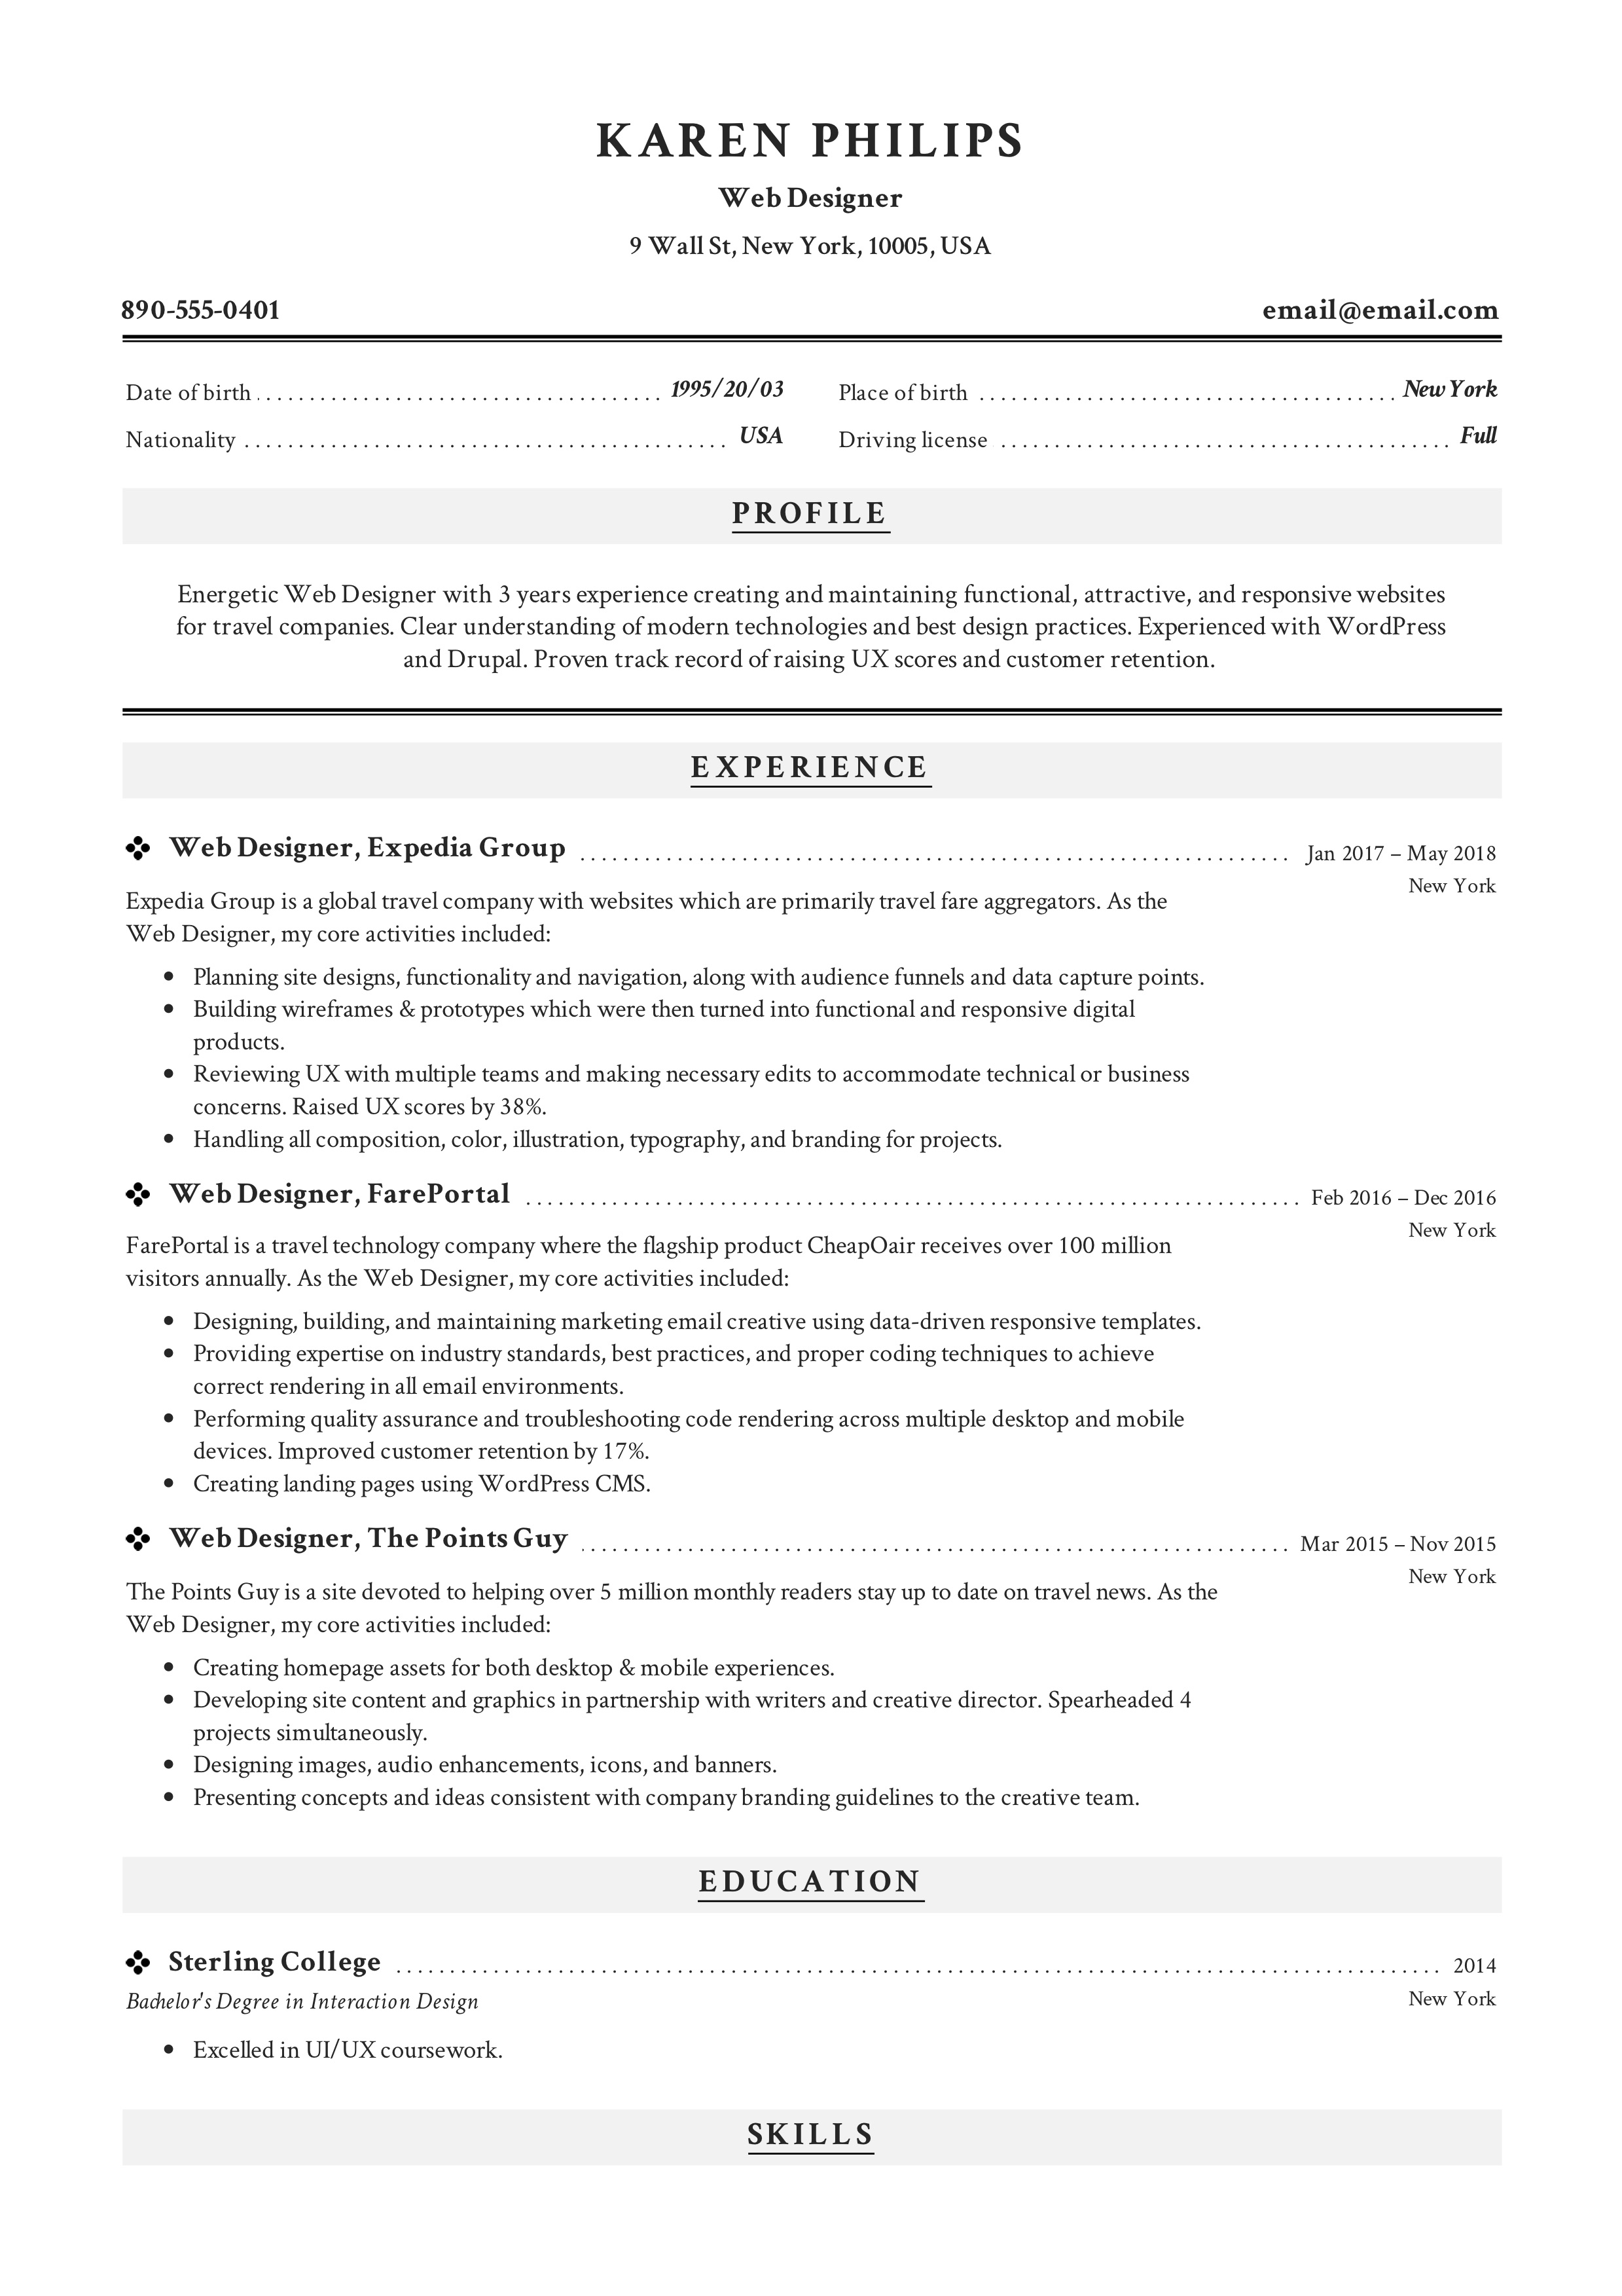 Web designer resume